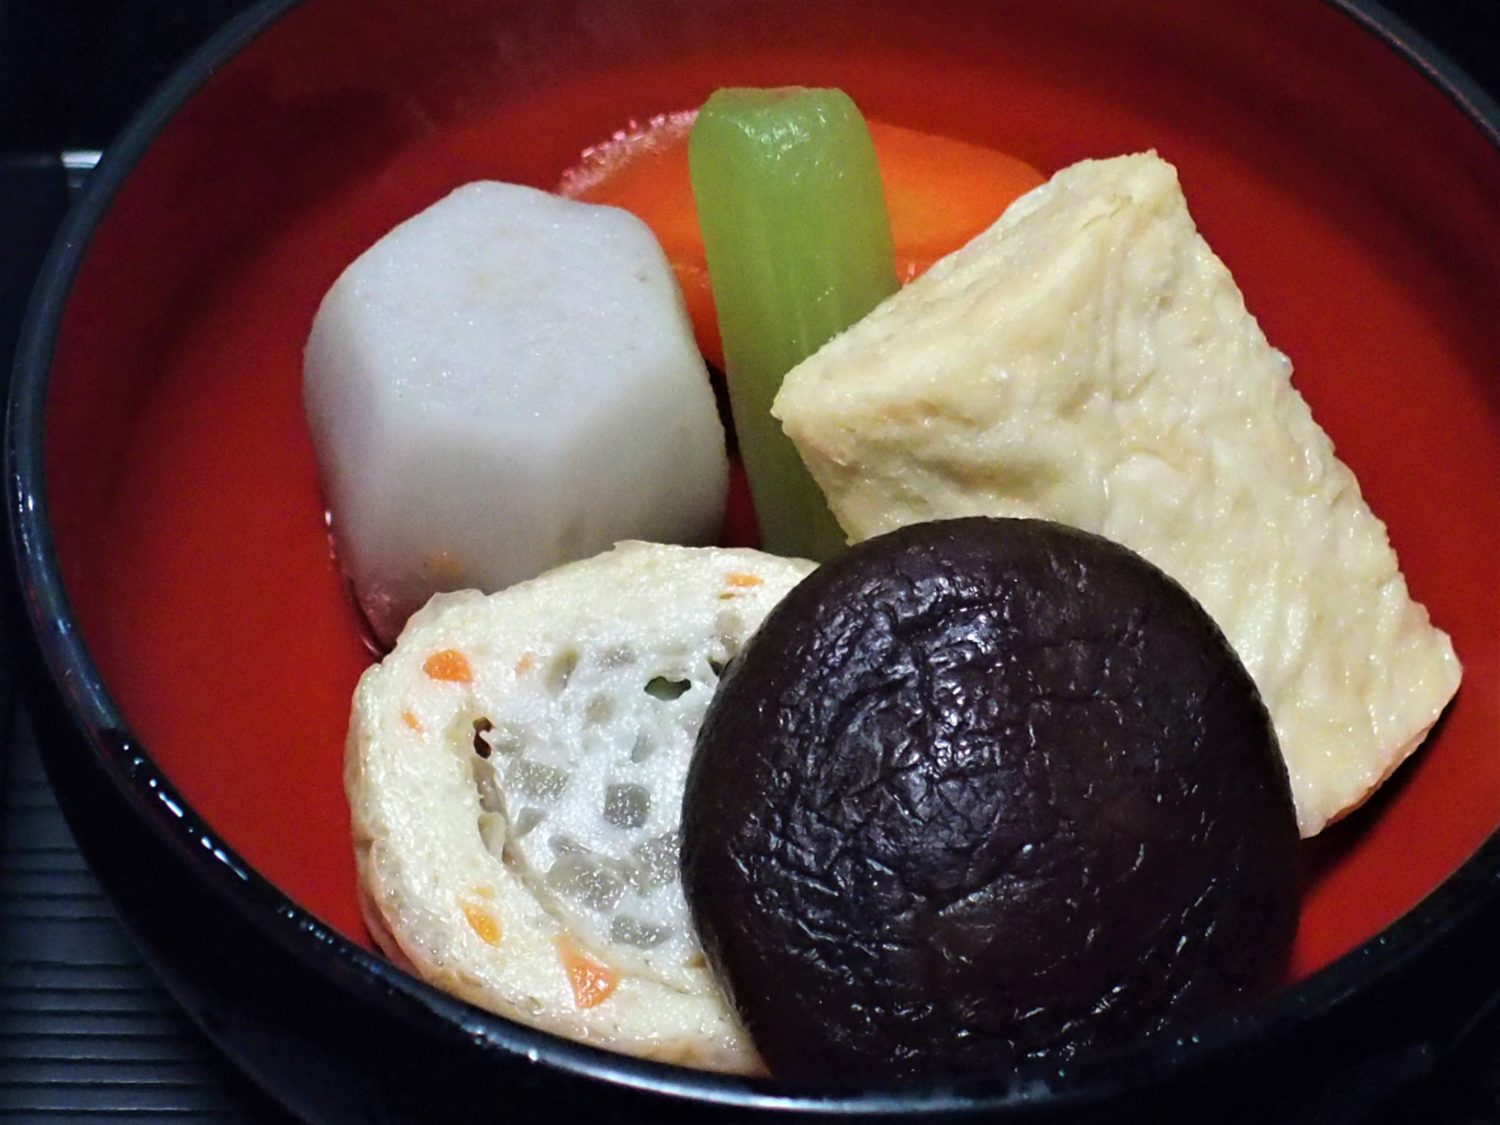 "Shojin ryori" (Buddhist vegetarian meal)